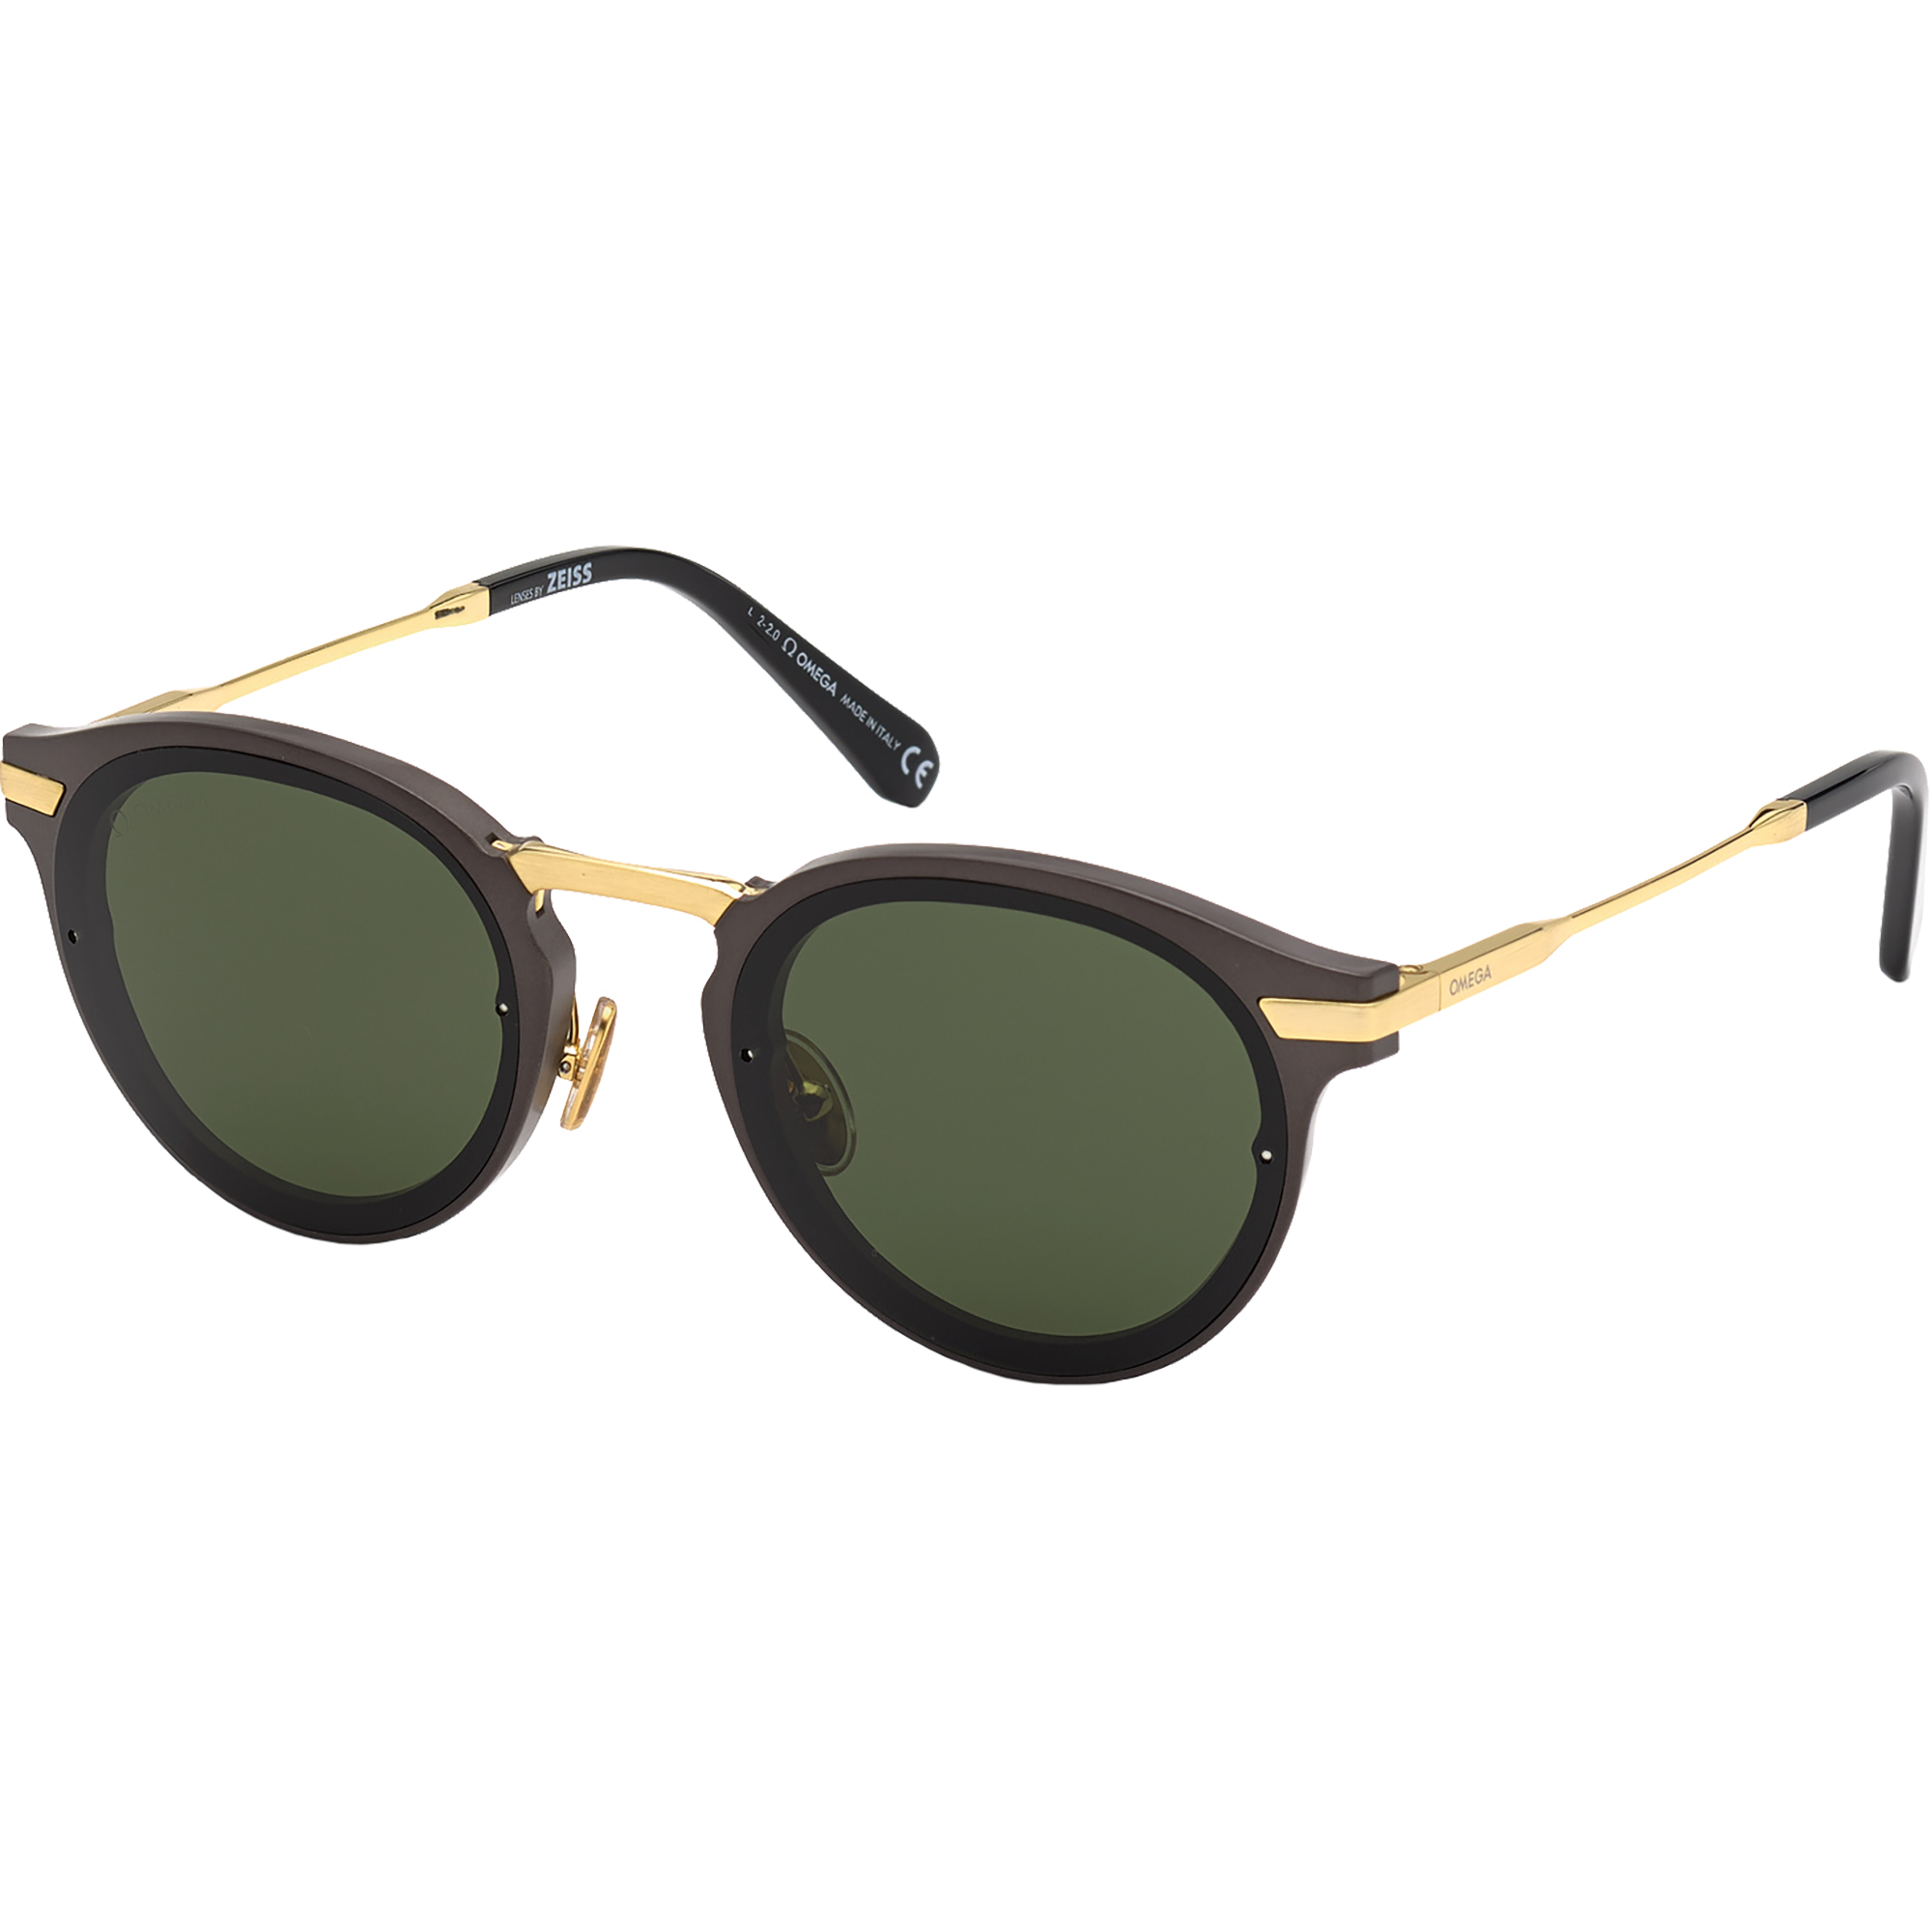 Sunglasses - Round style, Man - OM0029-H5408N